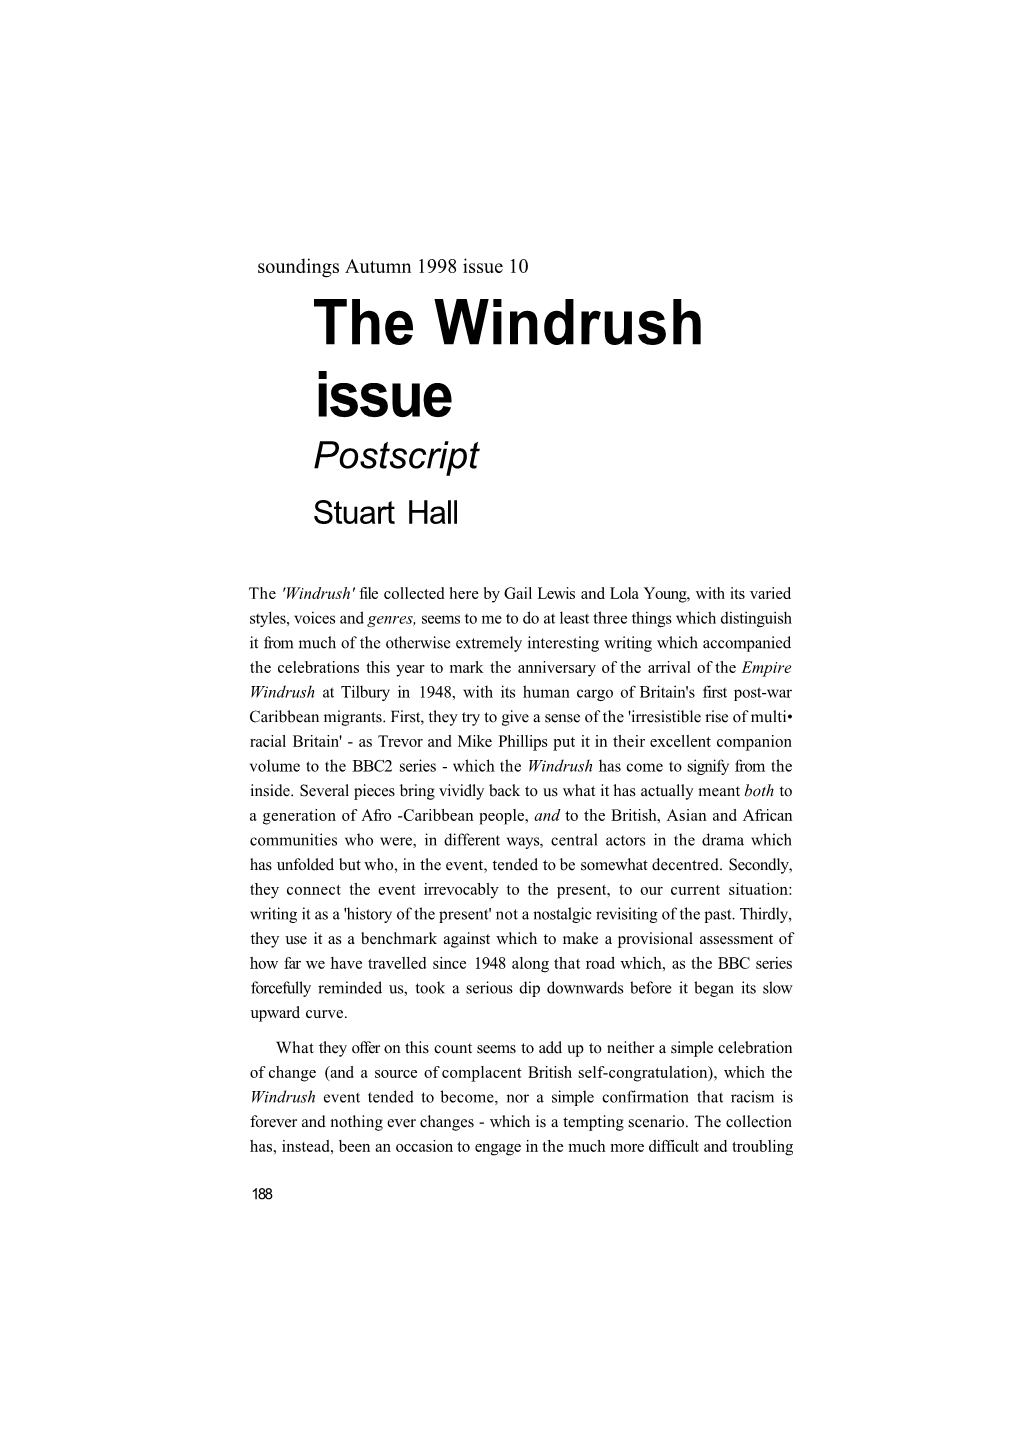 The Windrush Issue Postscript Stuart Hall